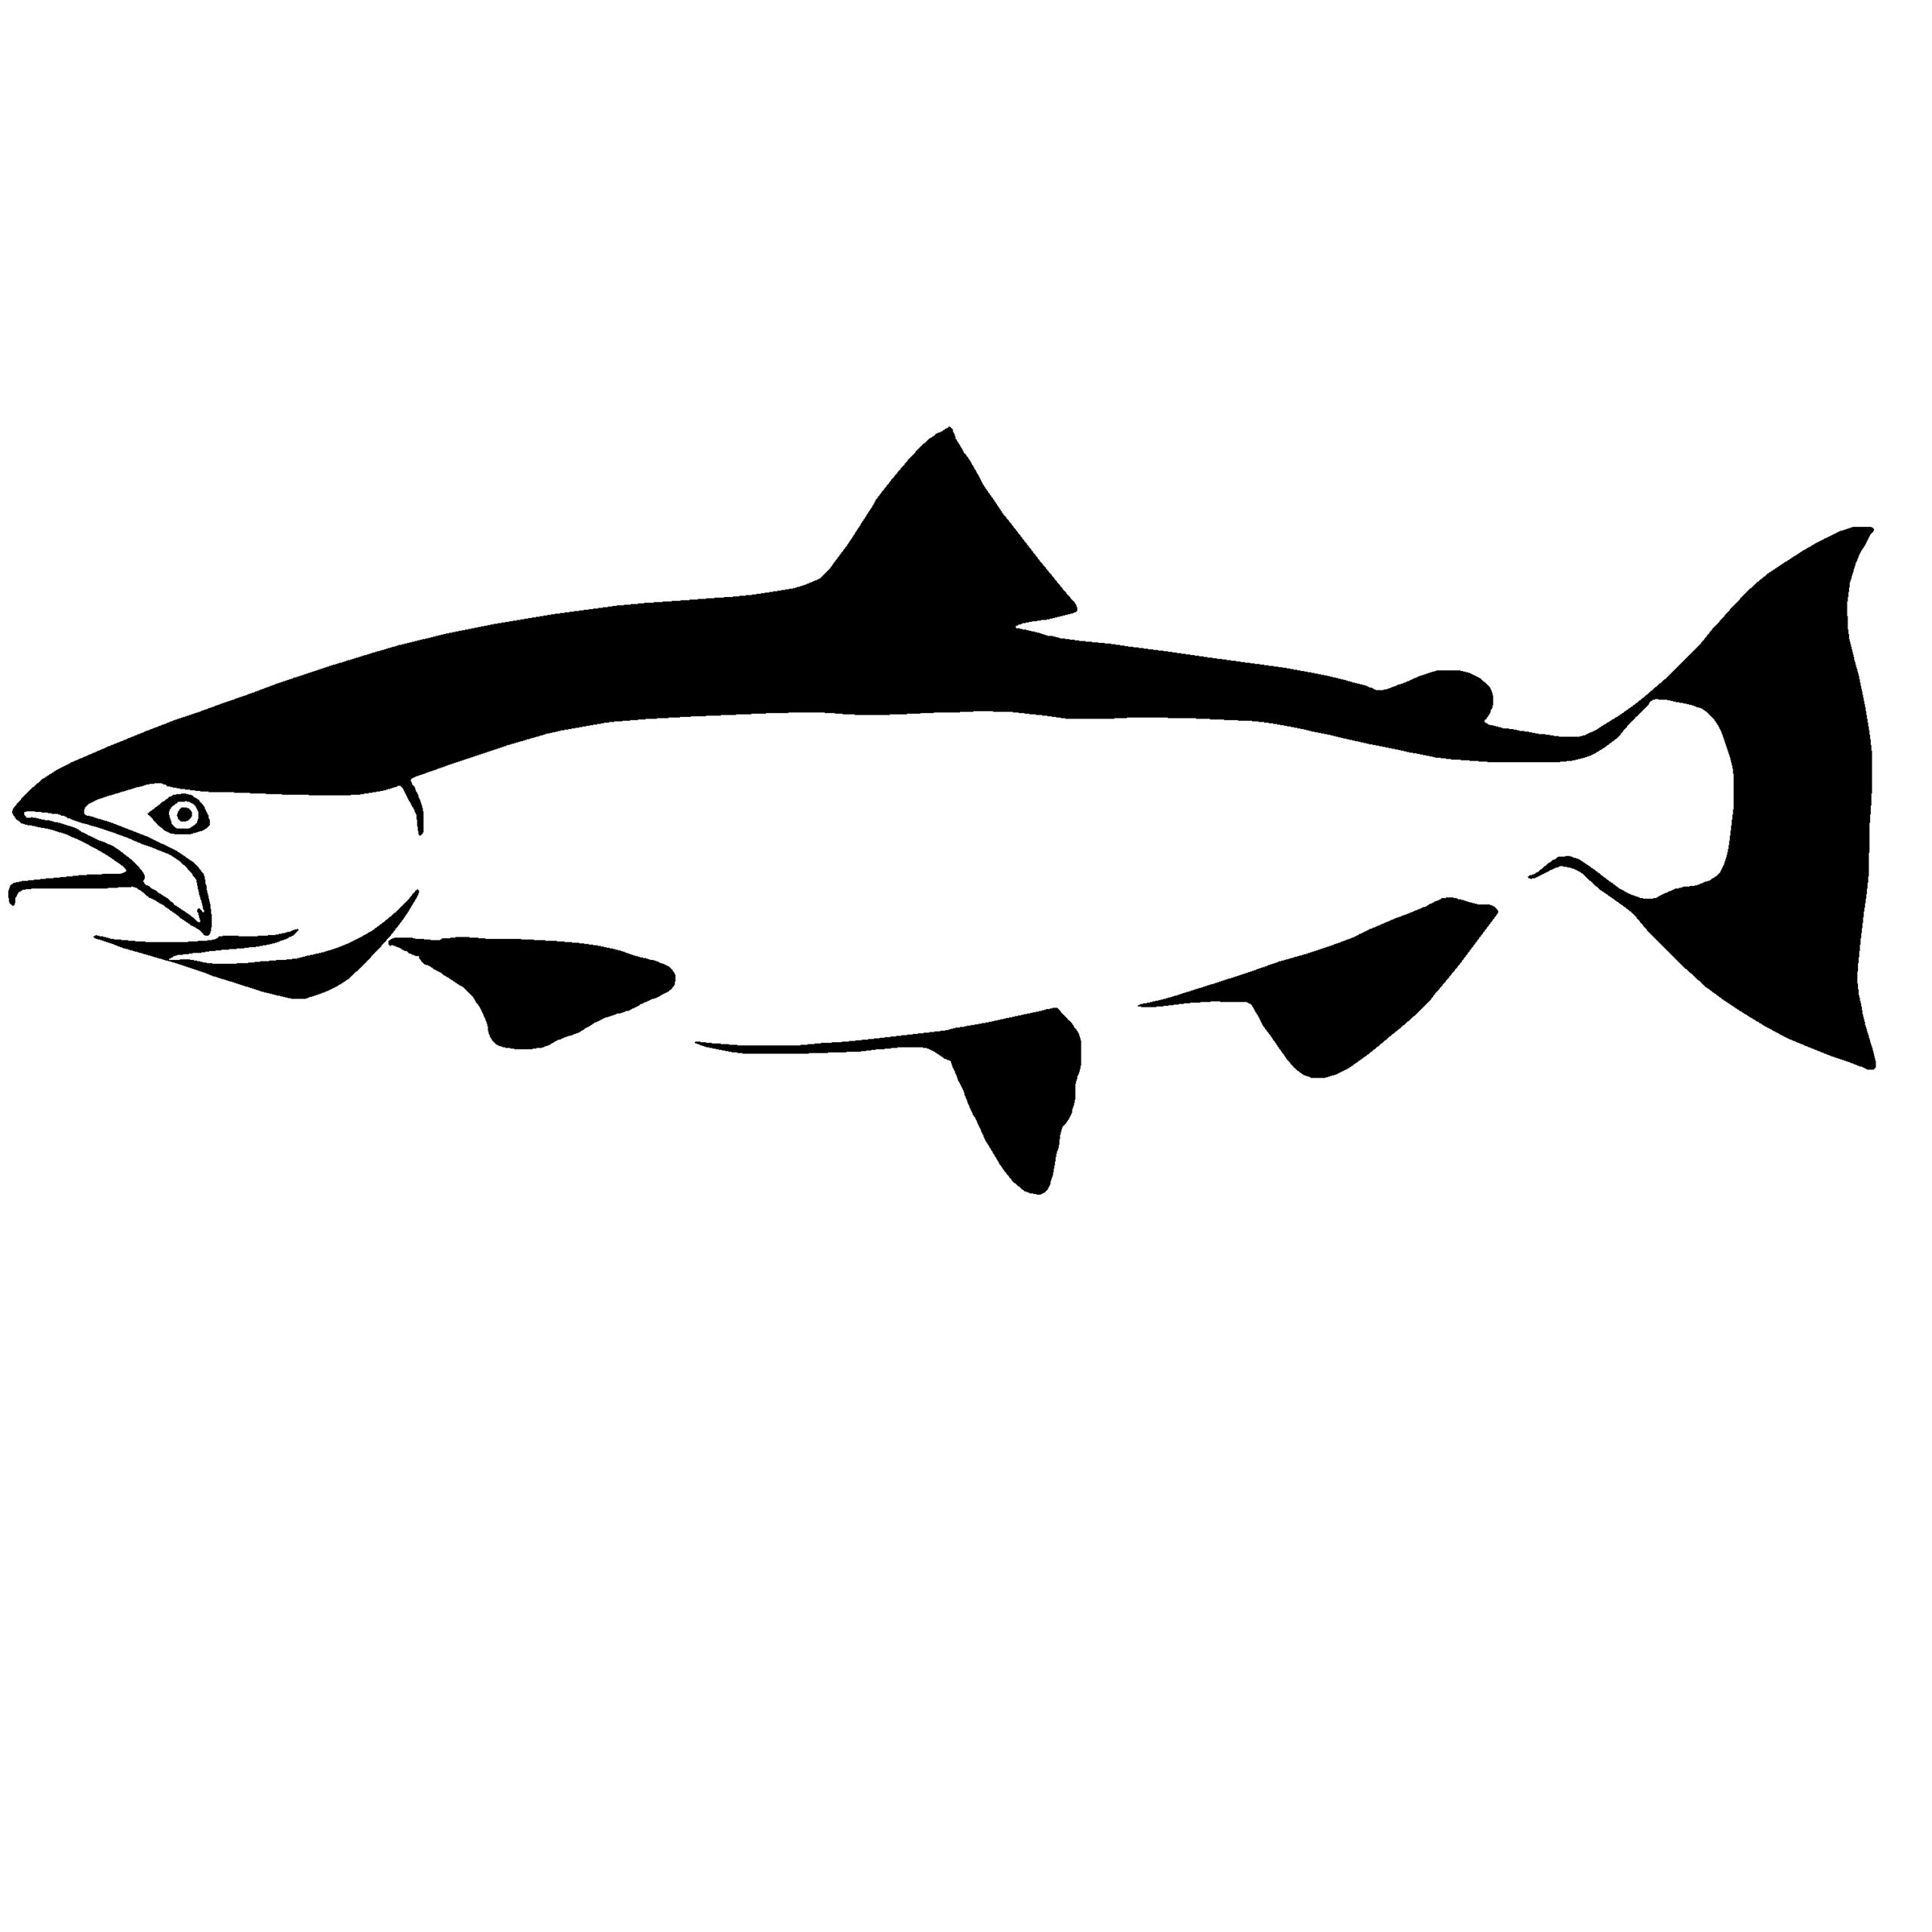 Salmon Fishing Decal - Salmon Fishing Sticker - 2209